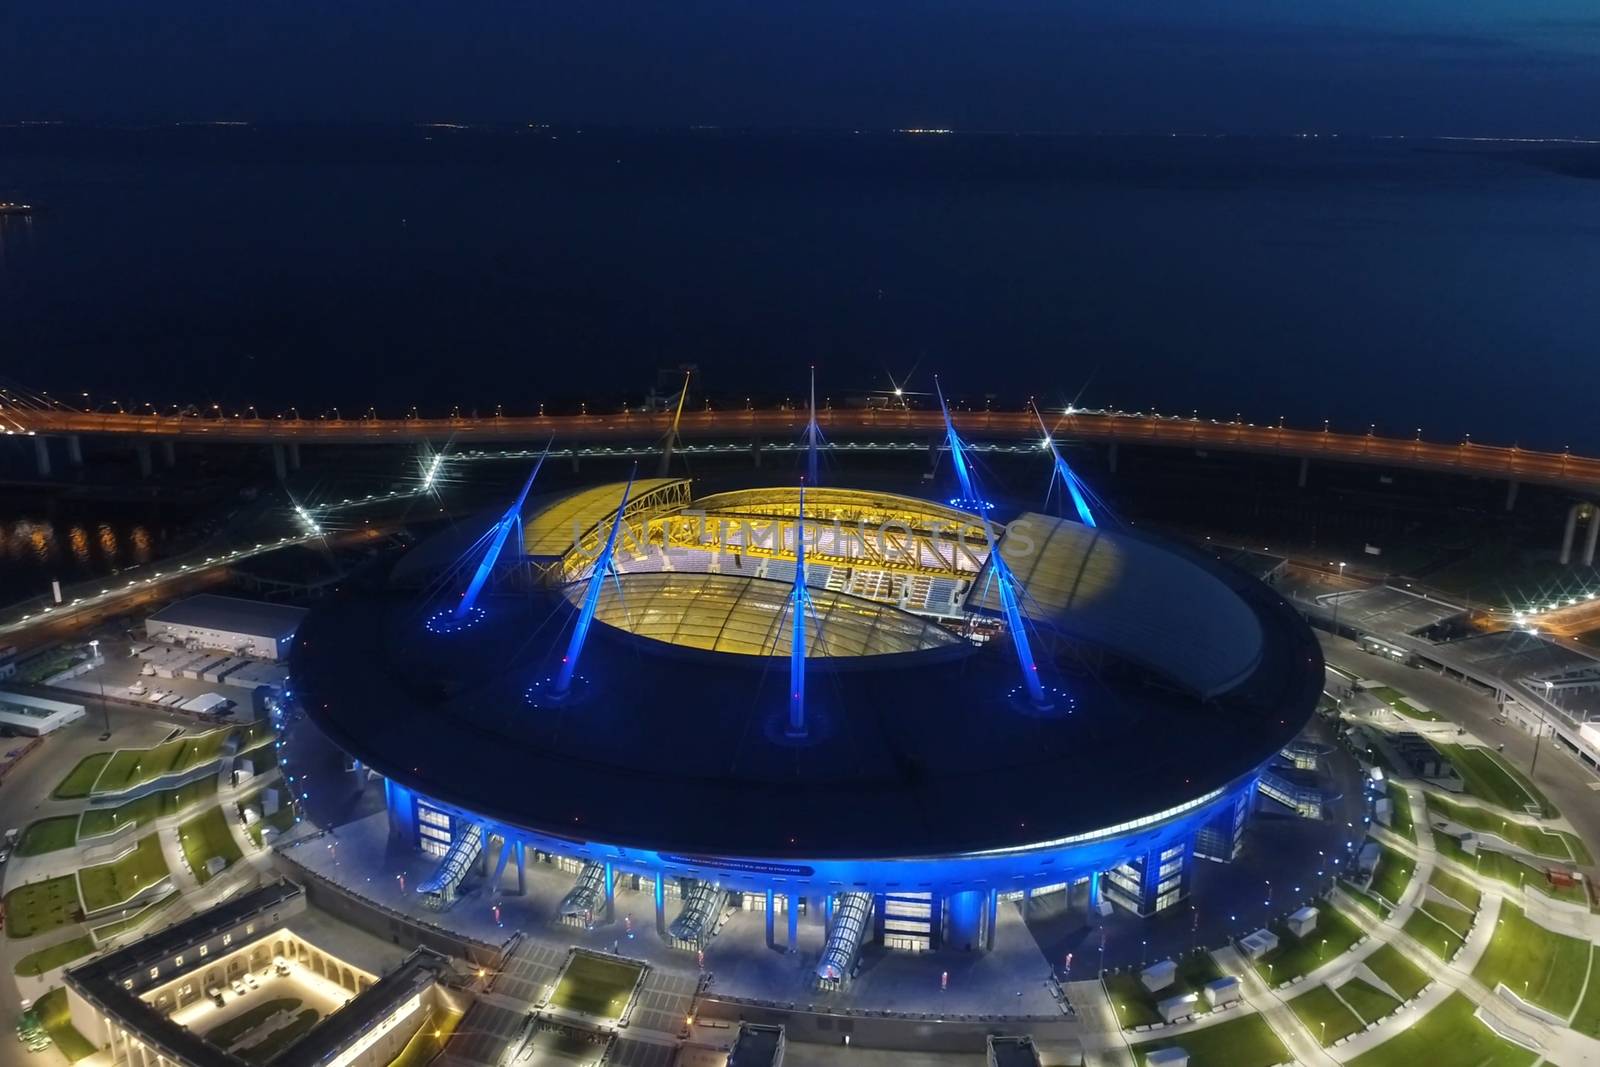 Stadium Zenith Arena at night. Illuminated by multi-colored lights the stadium at night